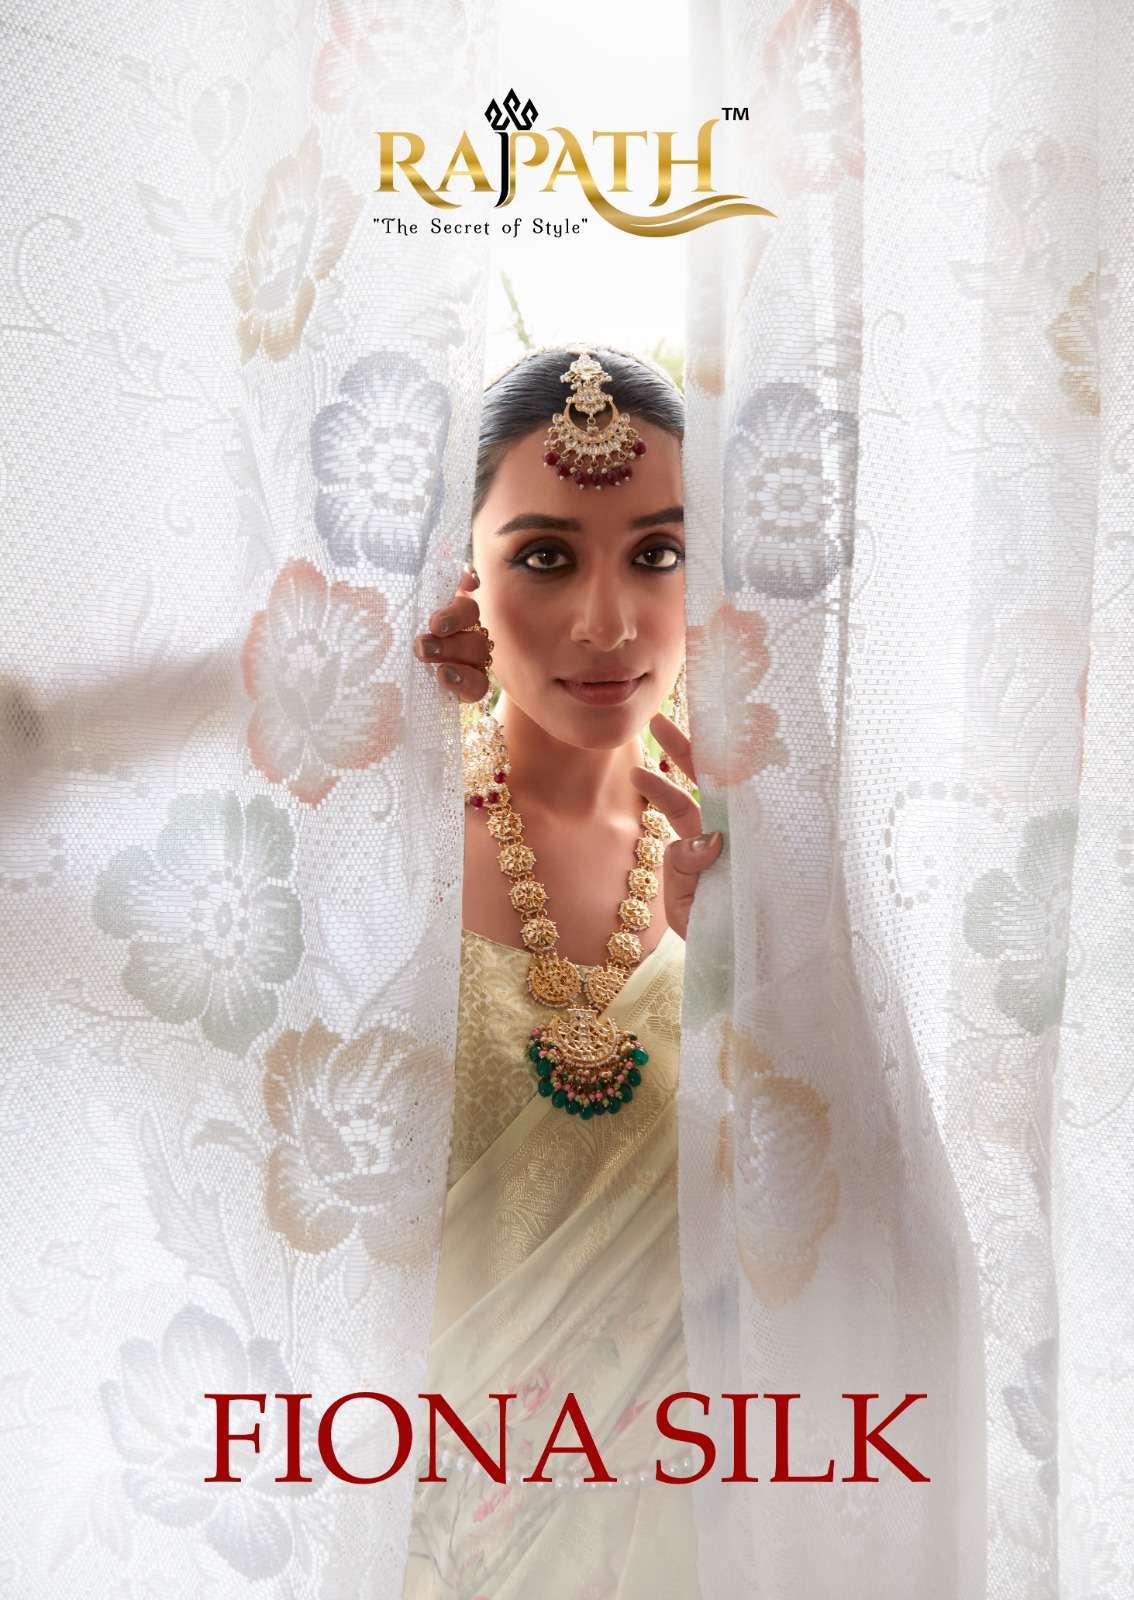 Rajpath Fiona Silk with Flower Printed fancy look saree coll...